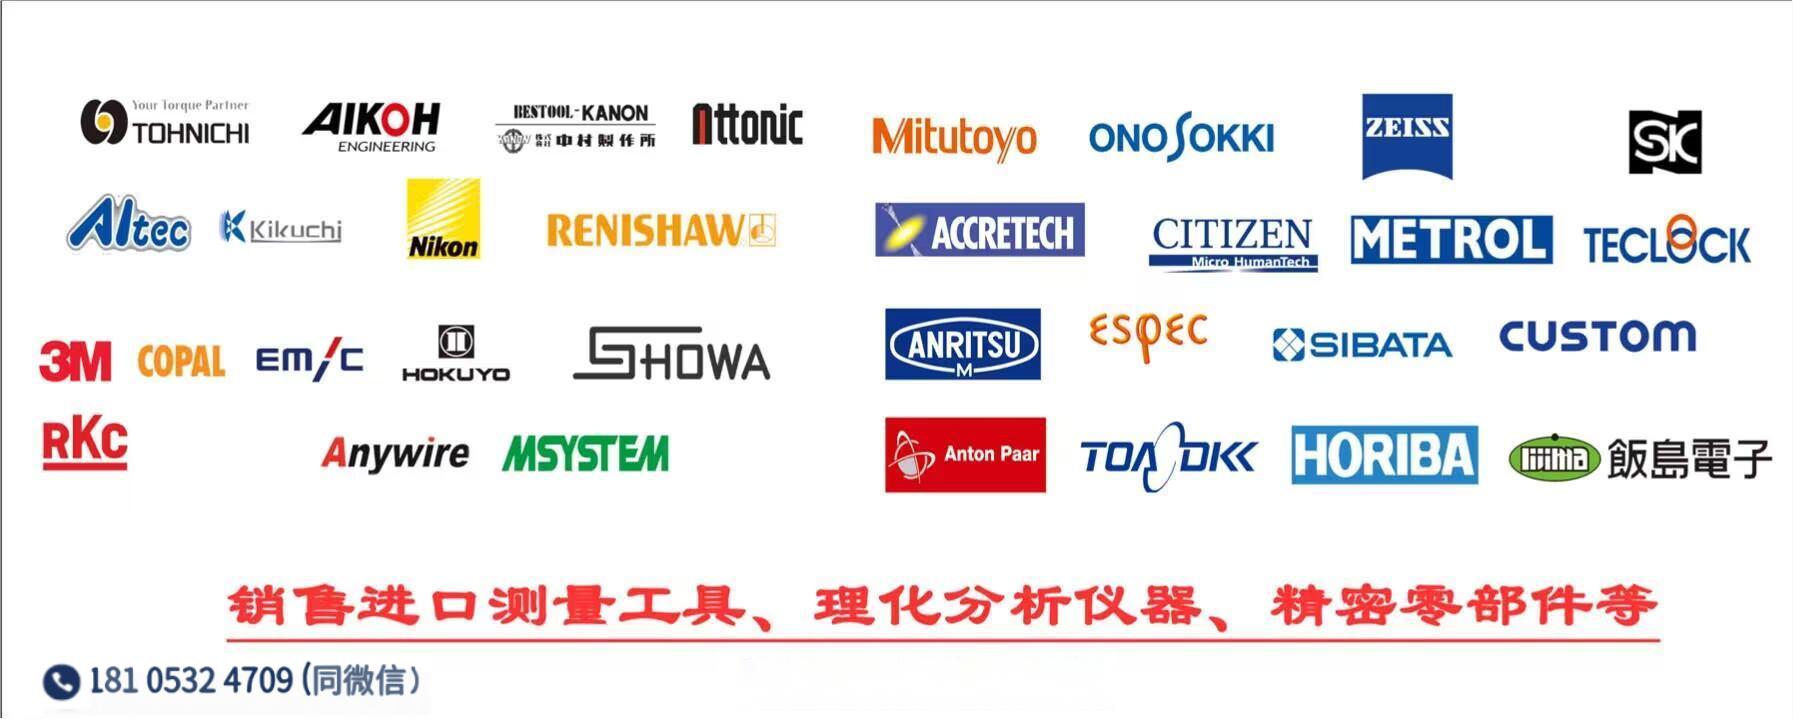 优势供应日本原装进口 厂家名称 エヌティーntcutter 产品